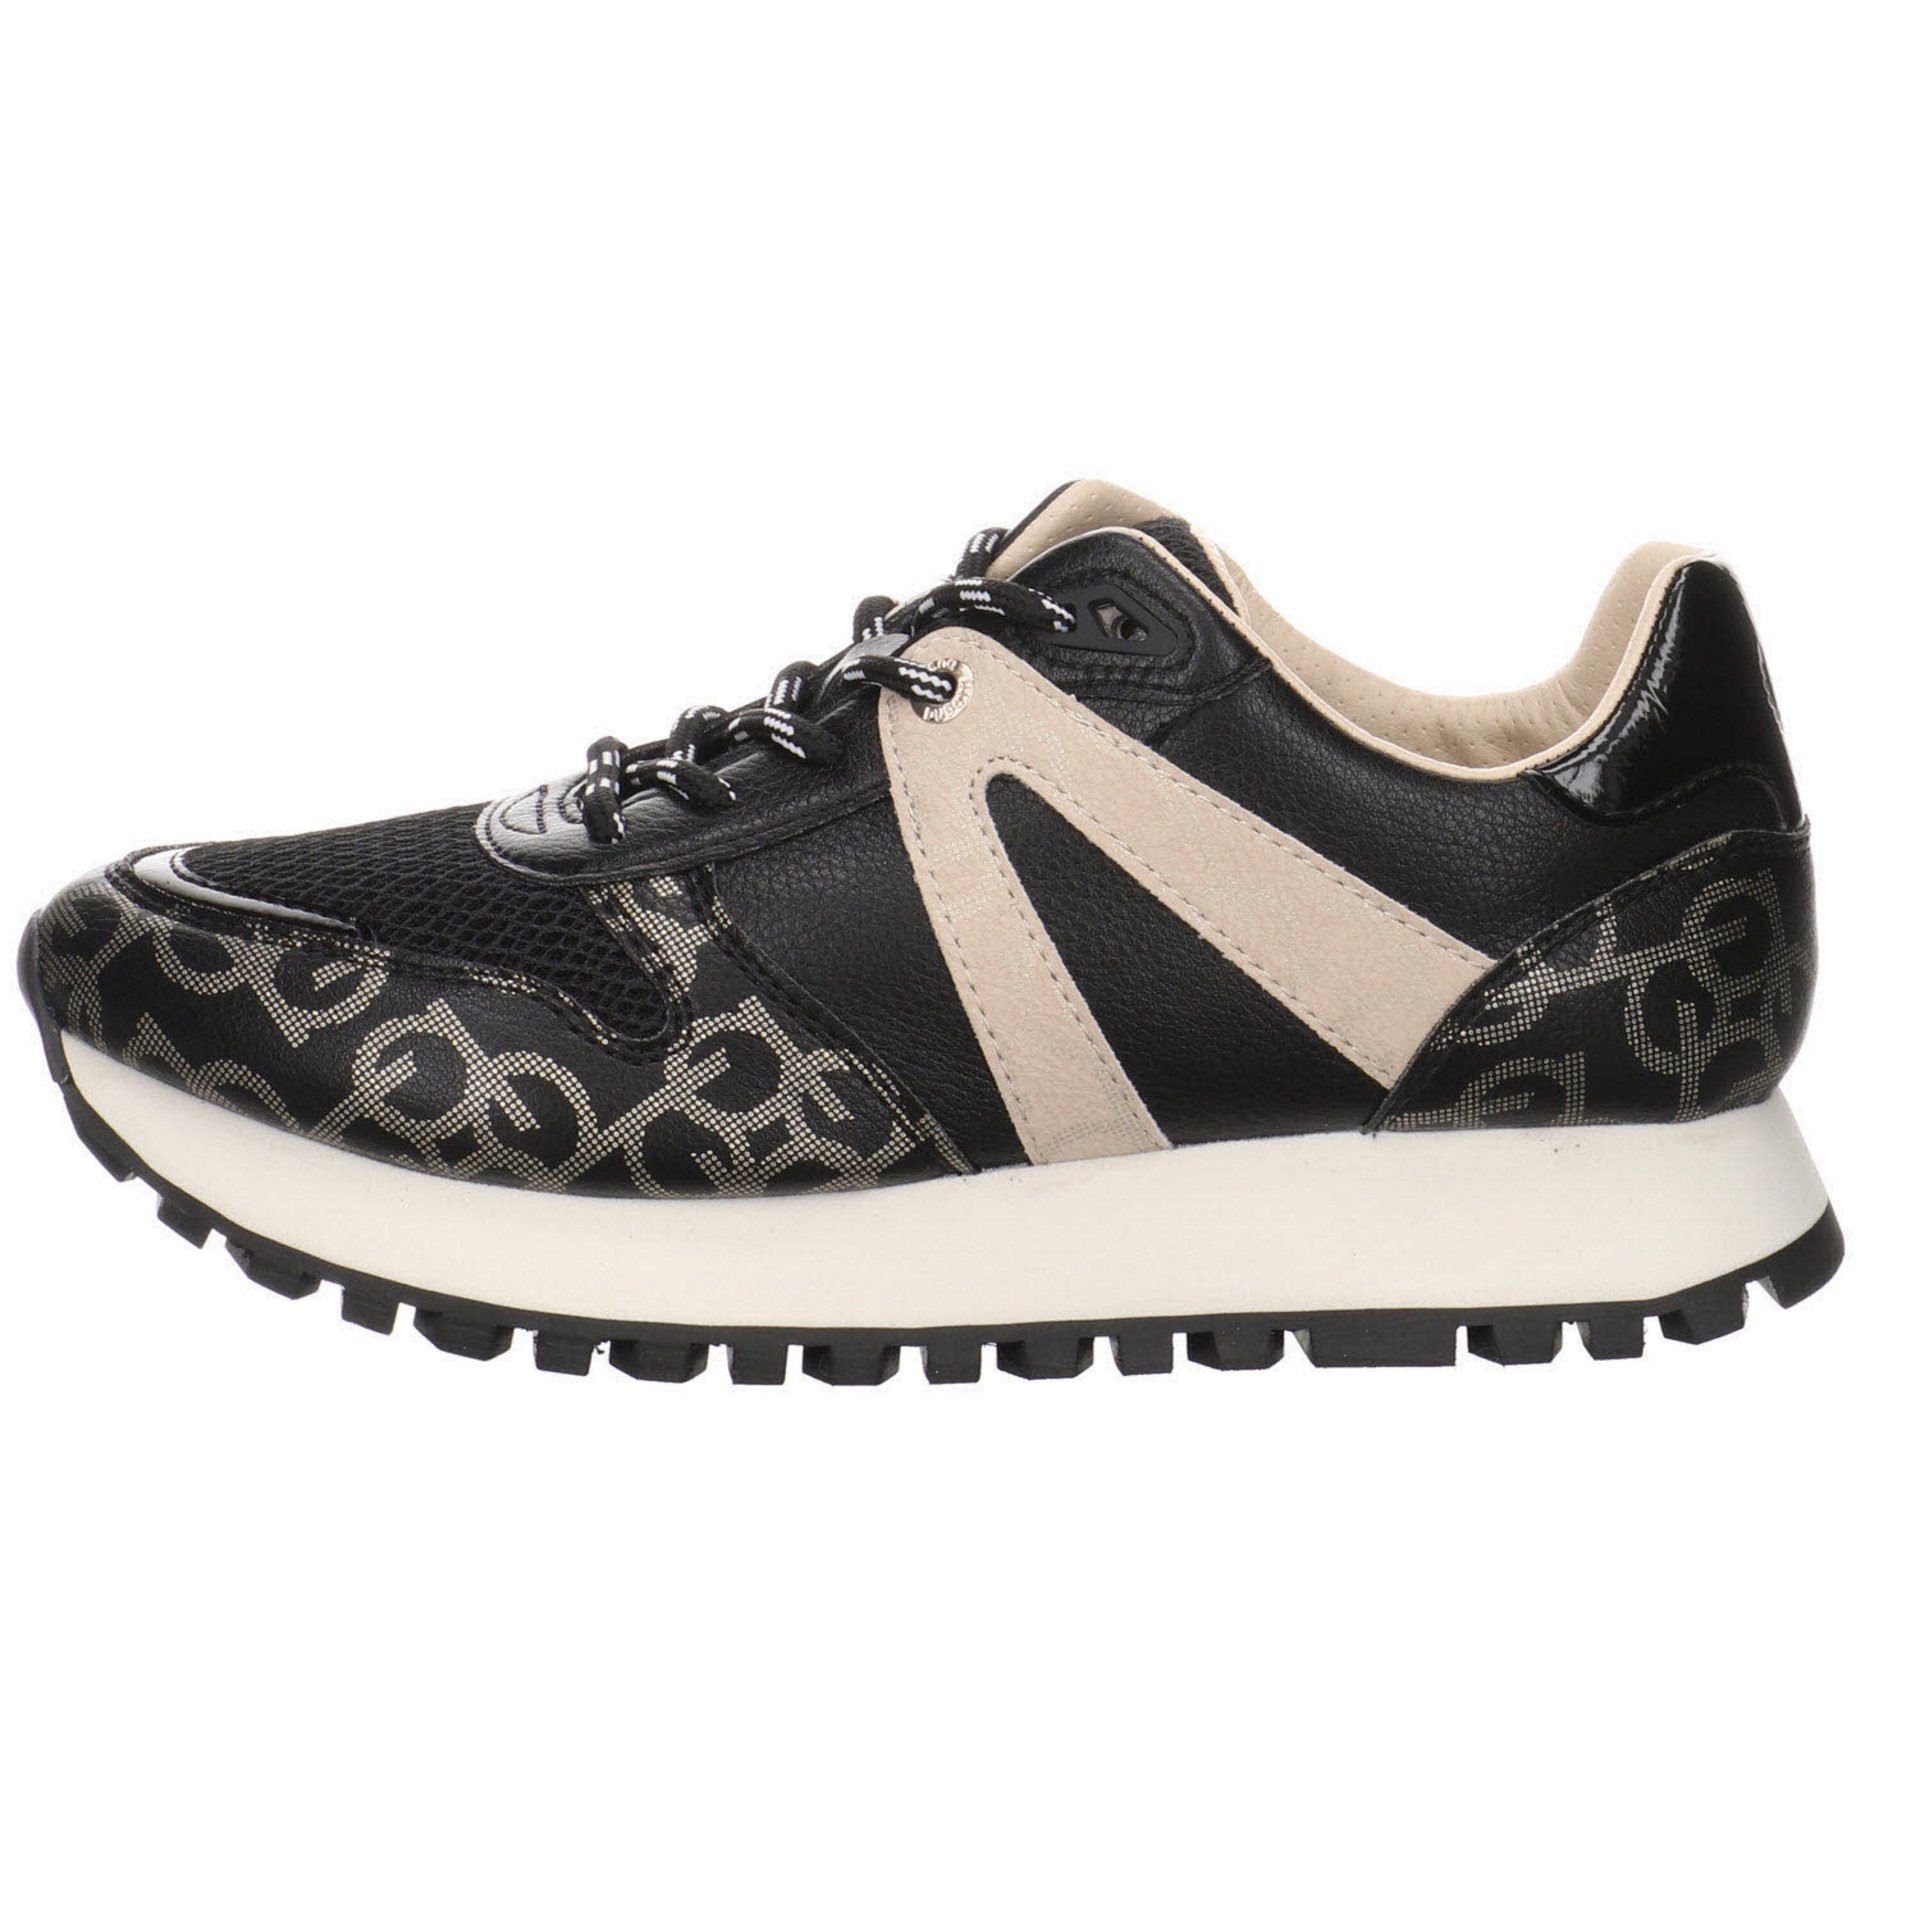 Schnürschuh black Damen Schuhe Leder-/Textilkombination beige bugatti Sneaker / Sneaker Siena